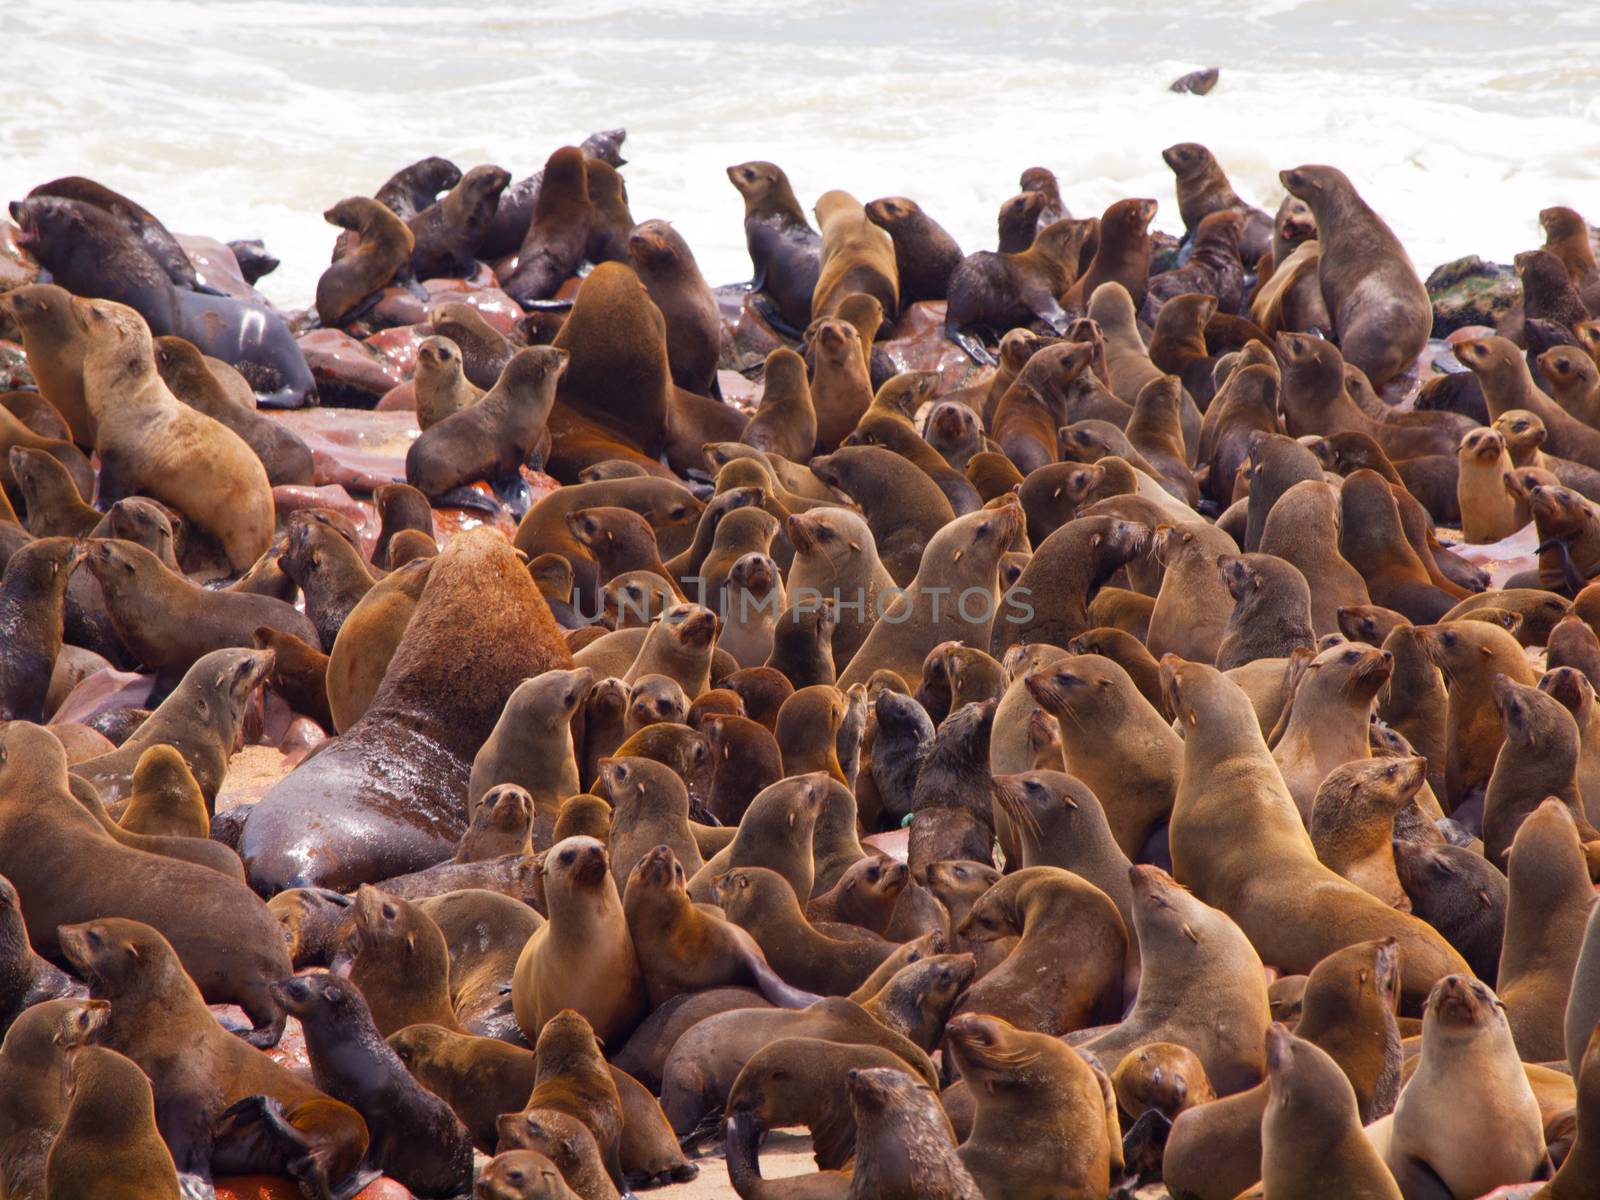 Brown Fur Seal colony at Cape Cross in Namibia (Arctocephalus pusillus)